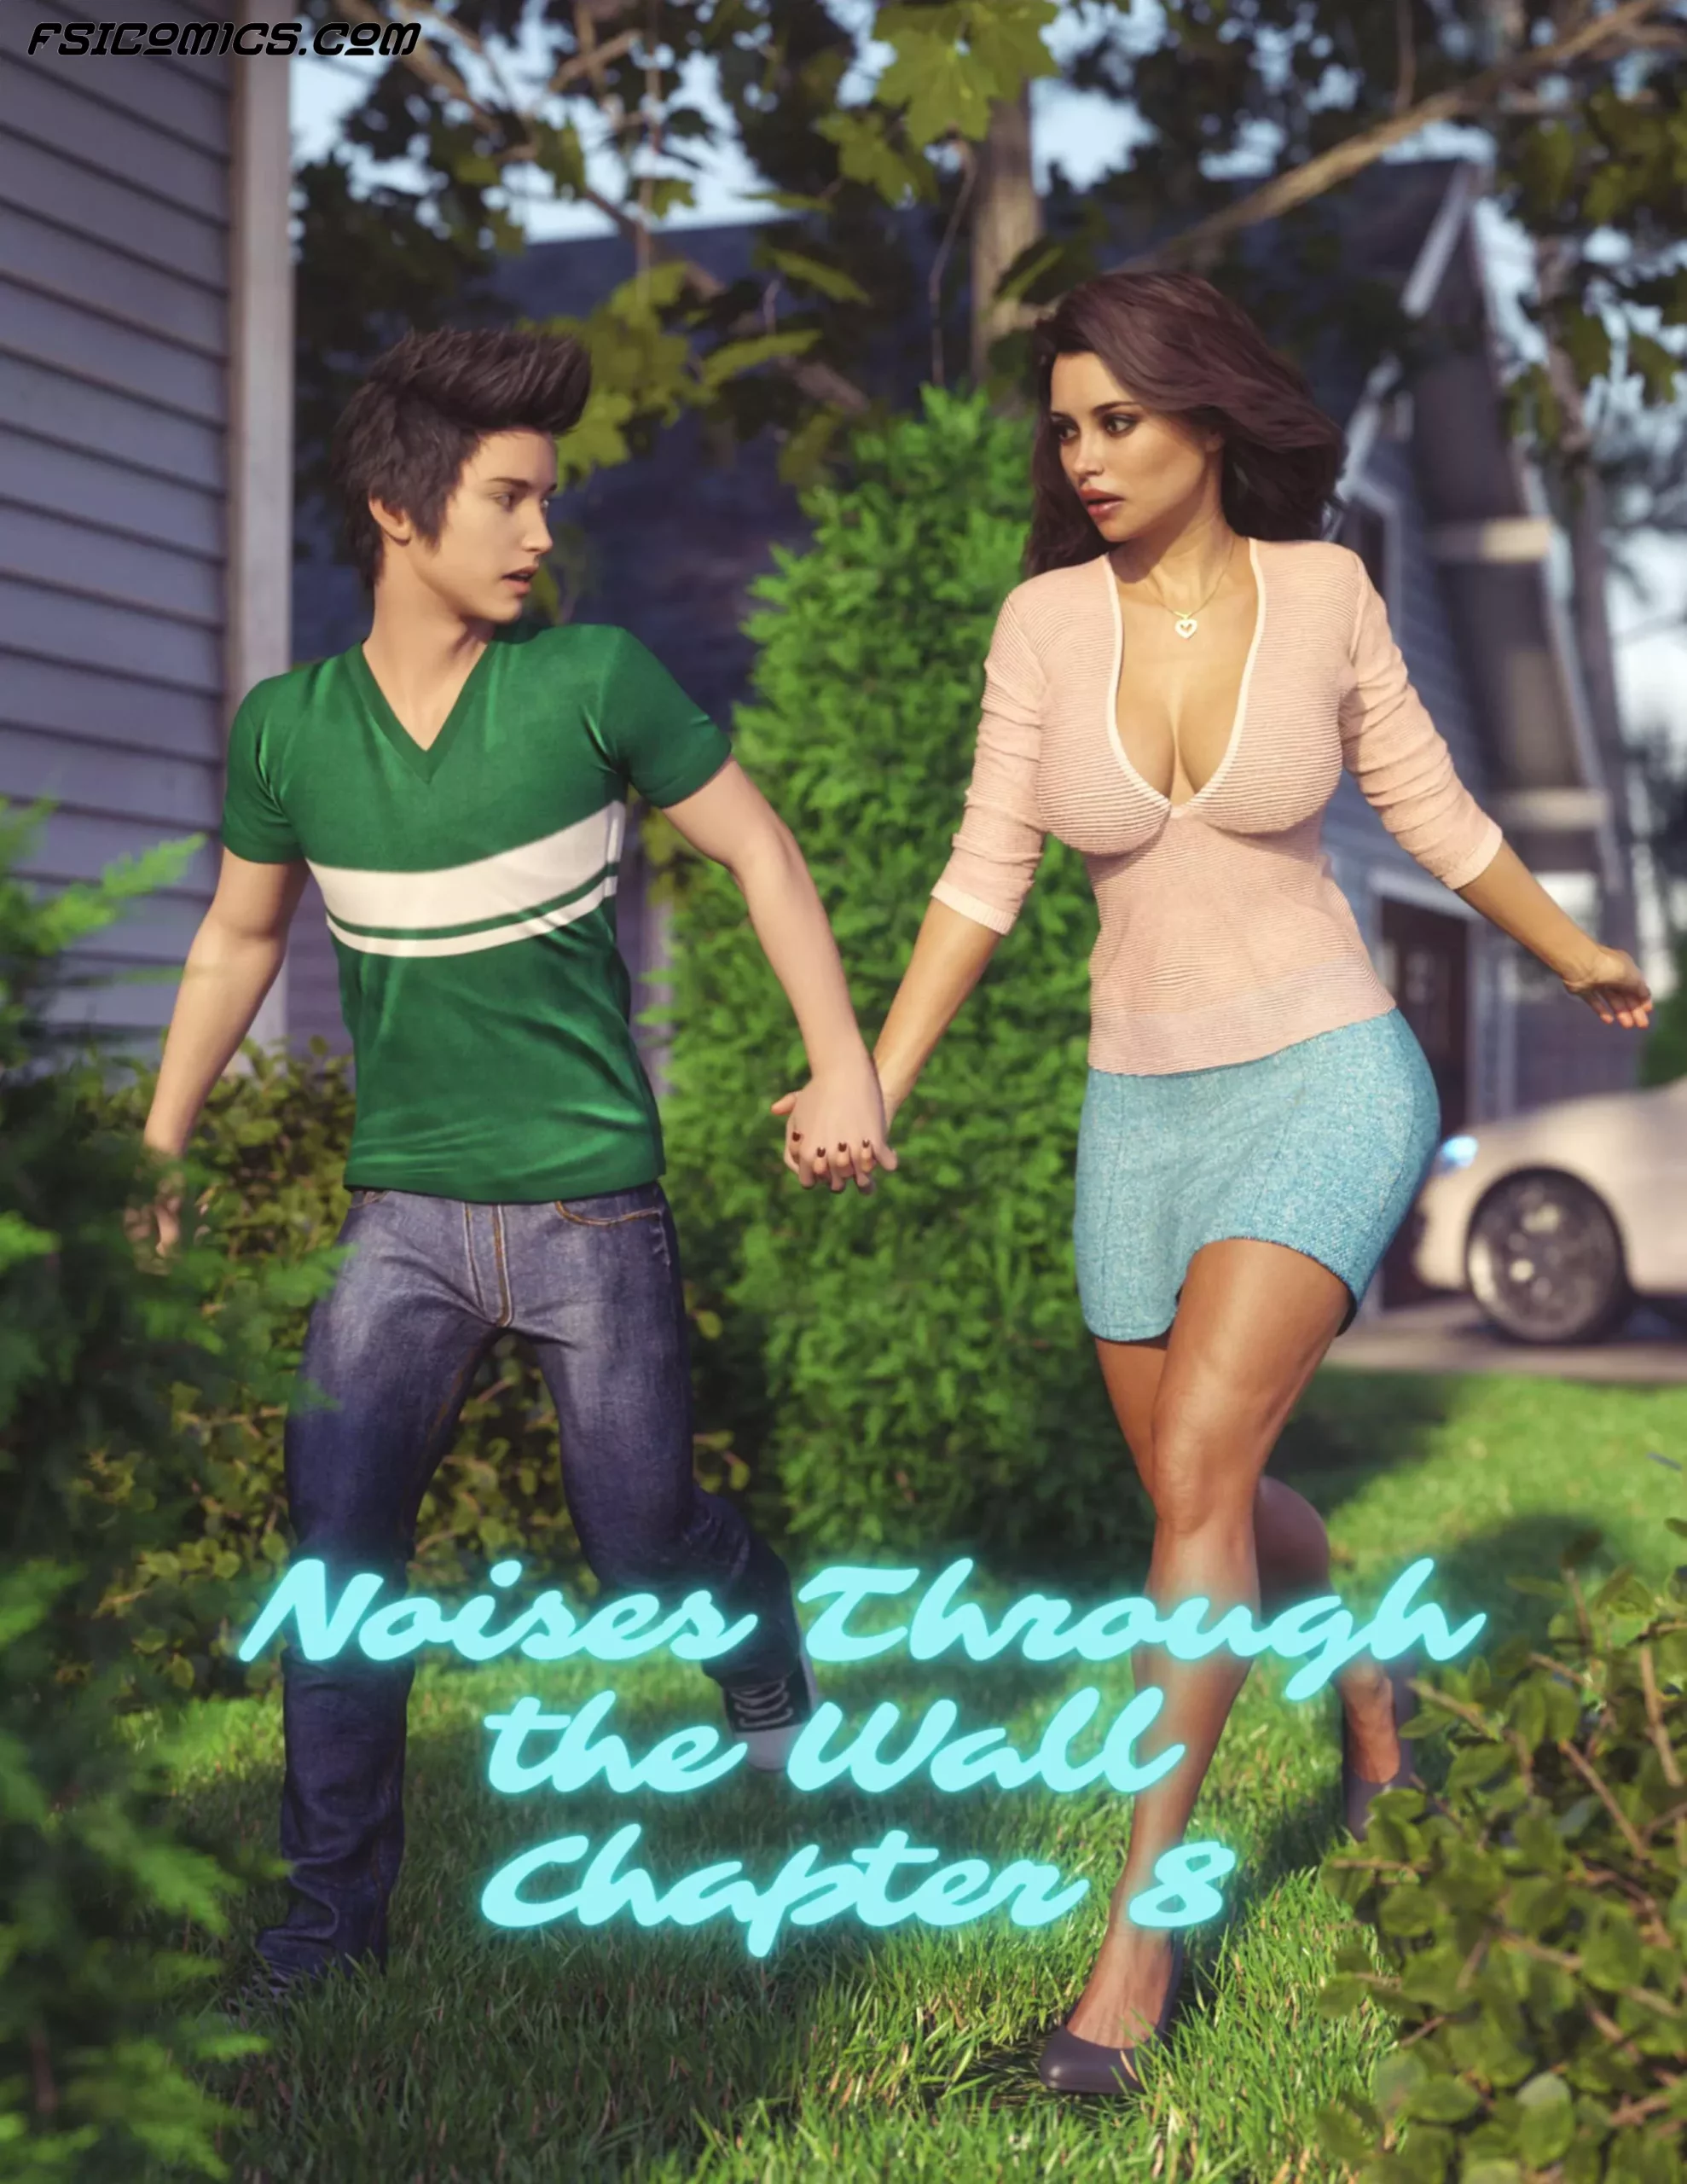 Noises Through The Wall Chapter 8 - Lexx228 - 59 - Fsicomics